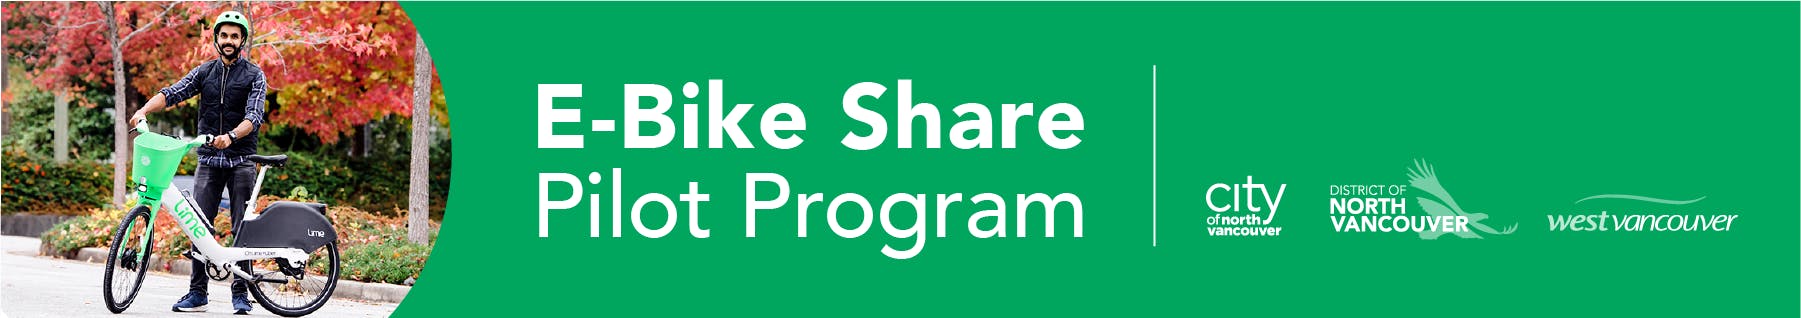 E-Bike Share Pilot Program